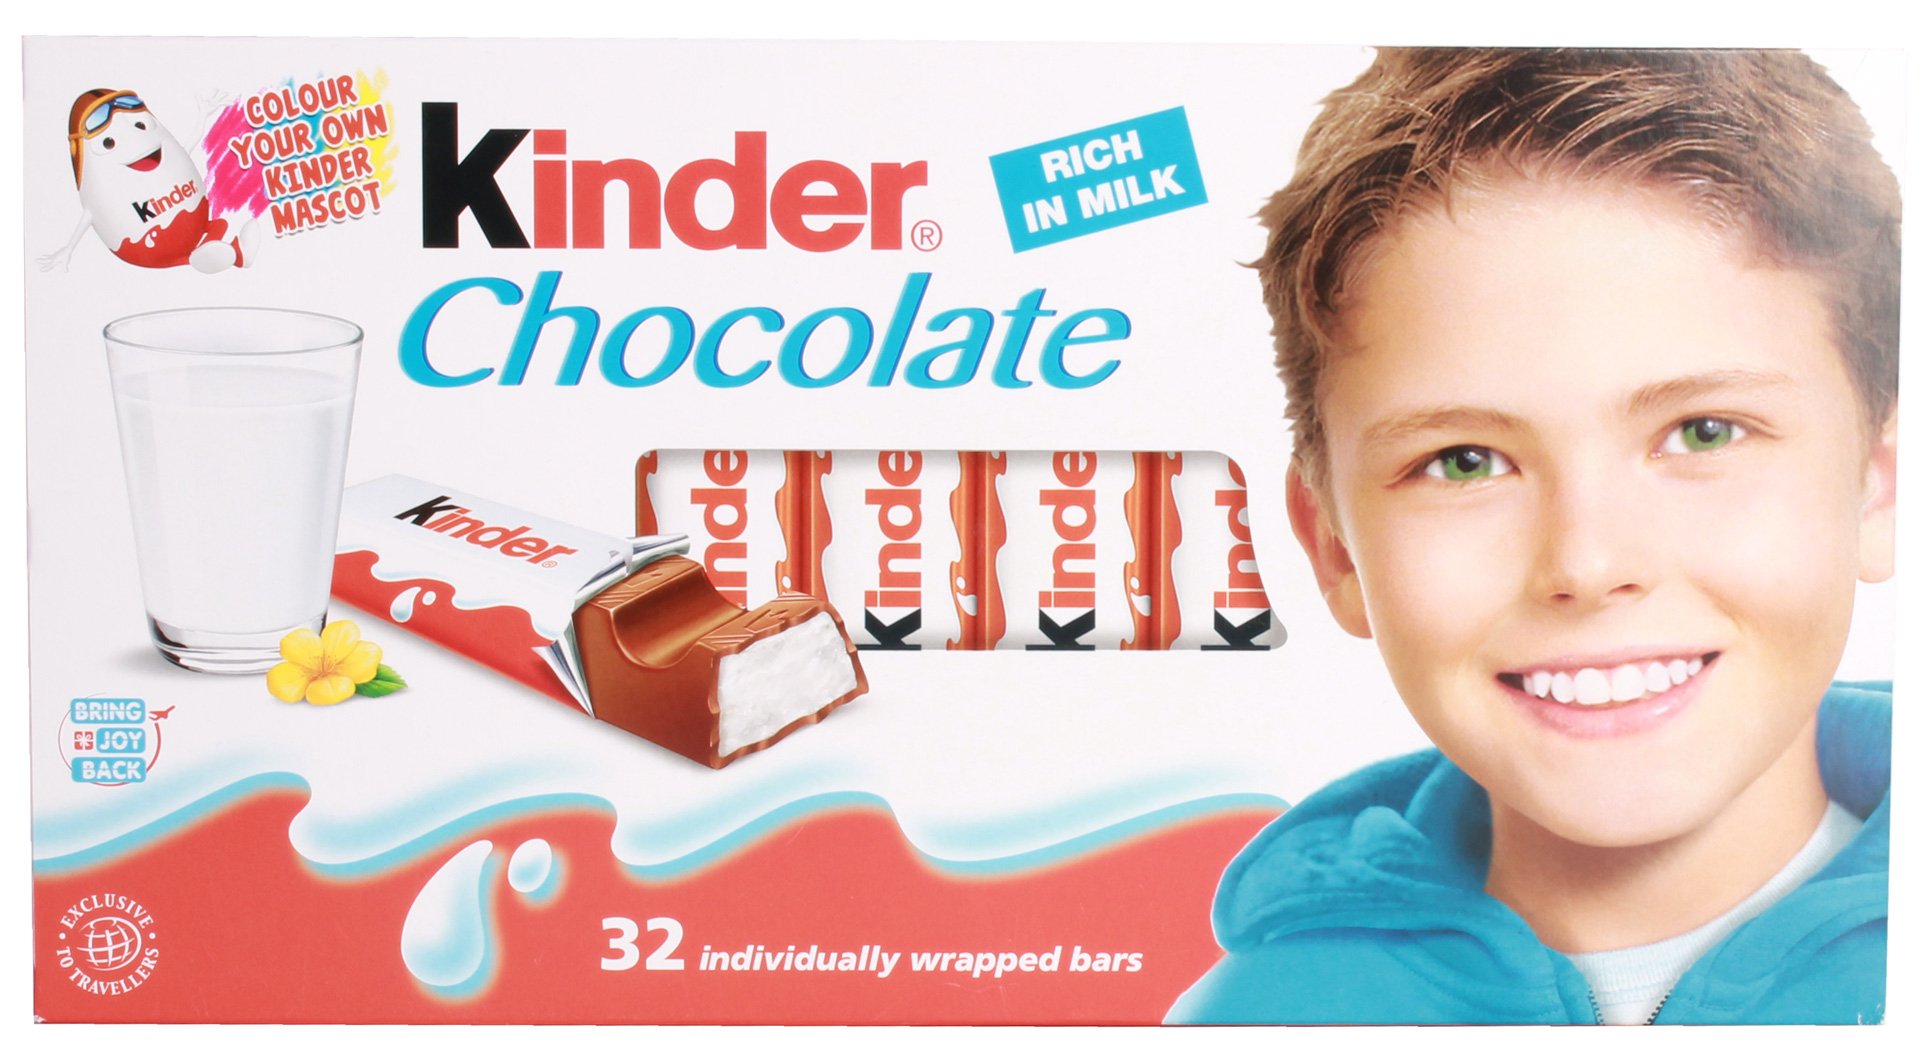 Kinder sind. Киндер шоколад. Киндер шоколад упаковка. Первый Киндер шоколад. Киндер шоколад большая упаковка.